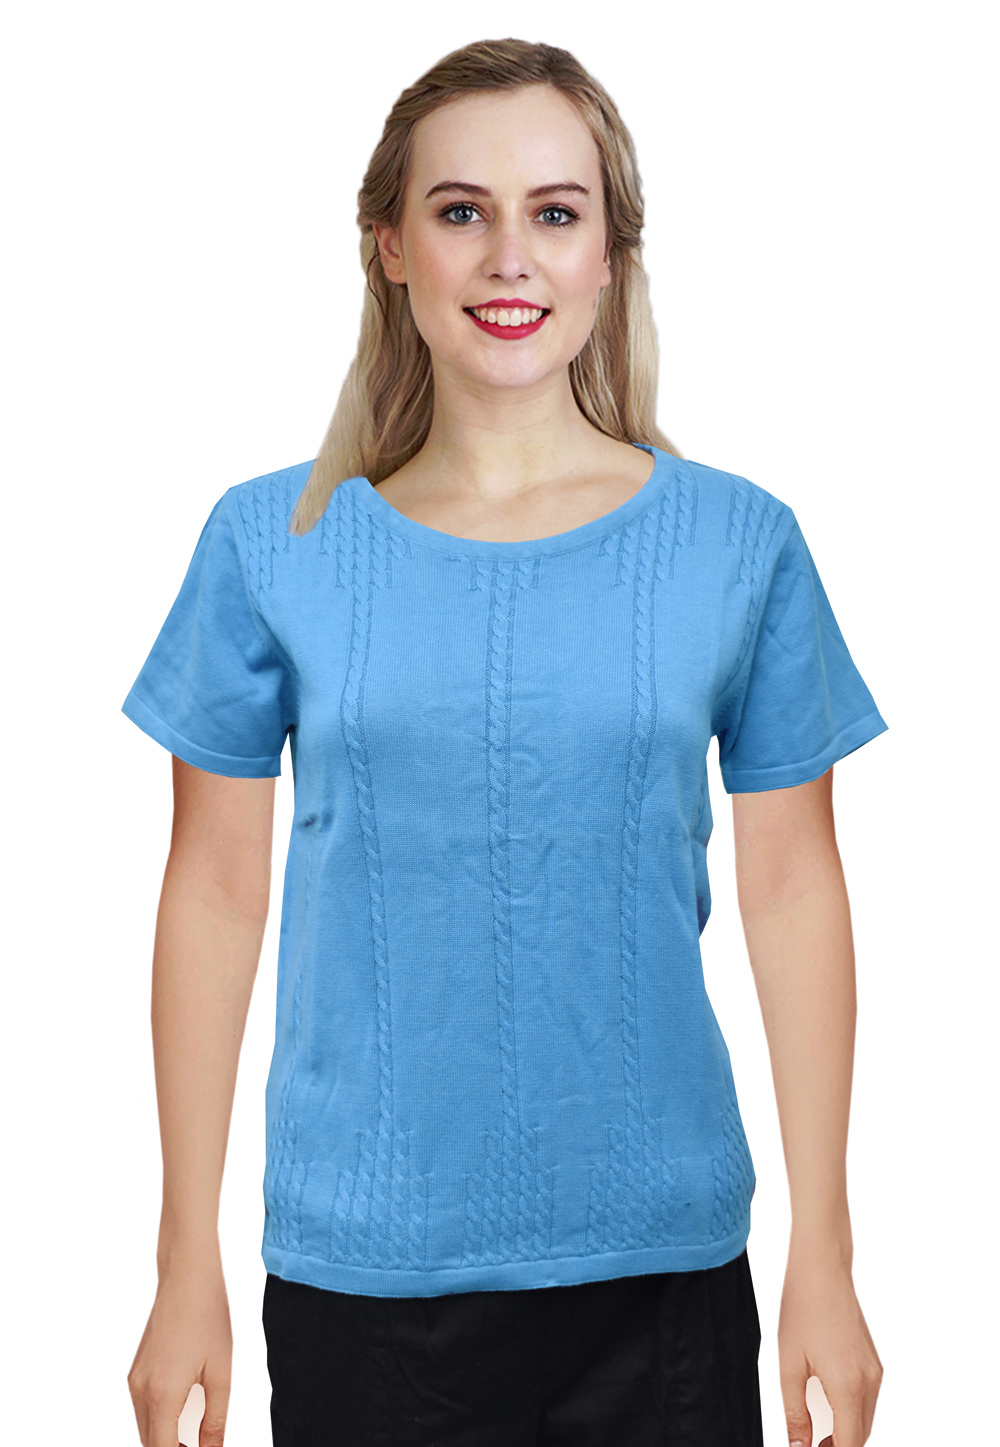 Sky Blue Woolen Knitted Tops 214253